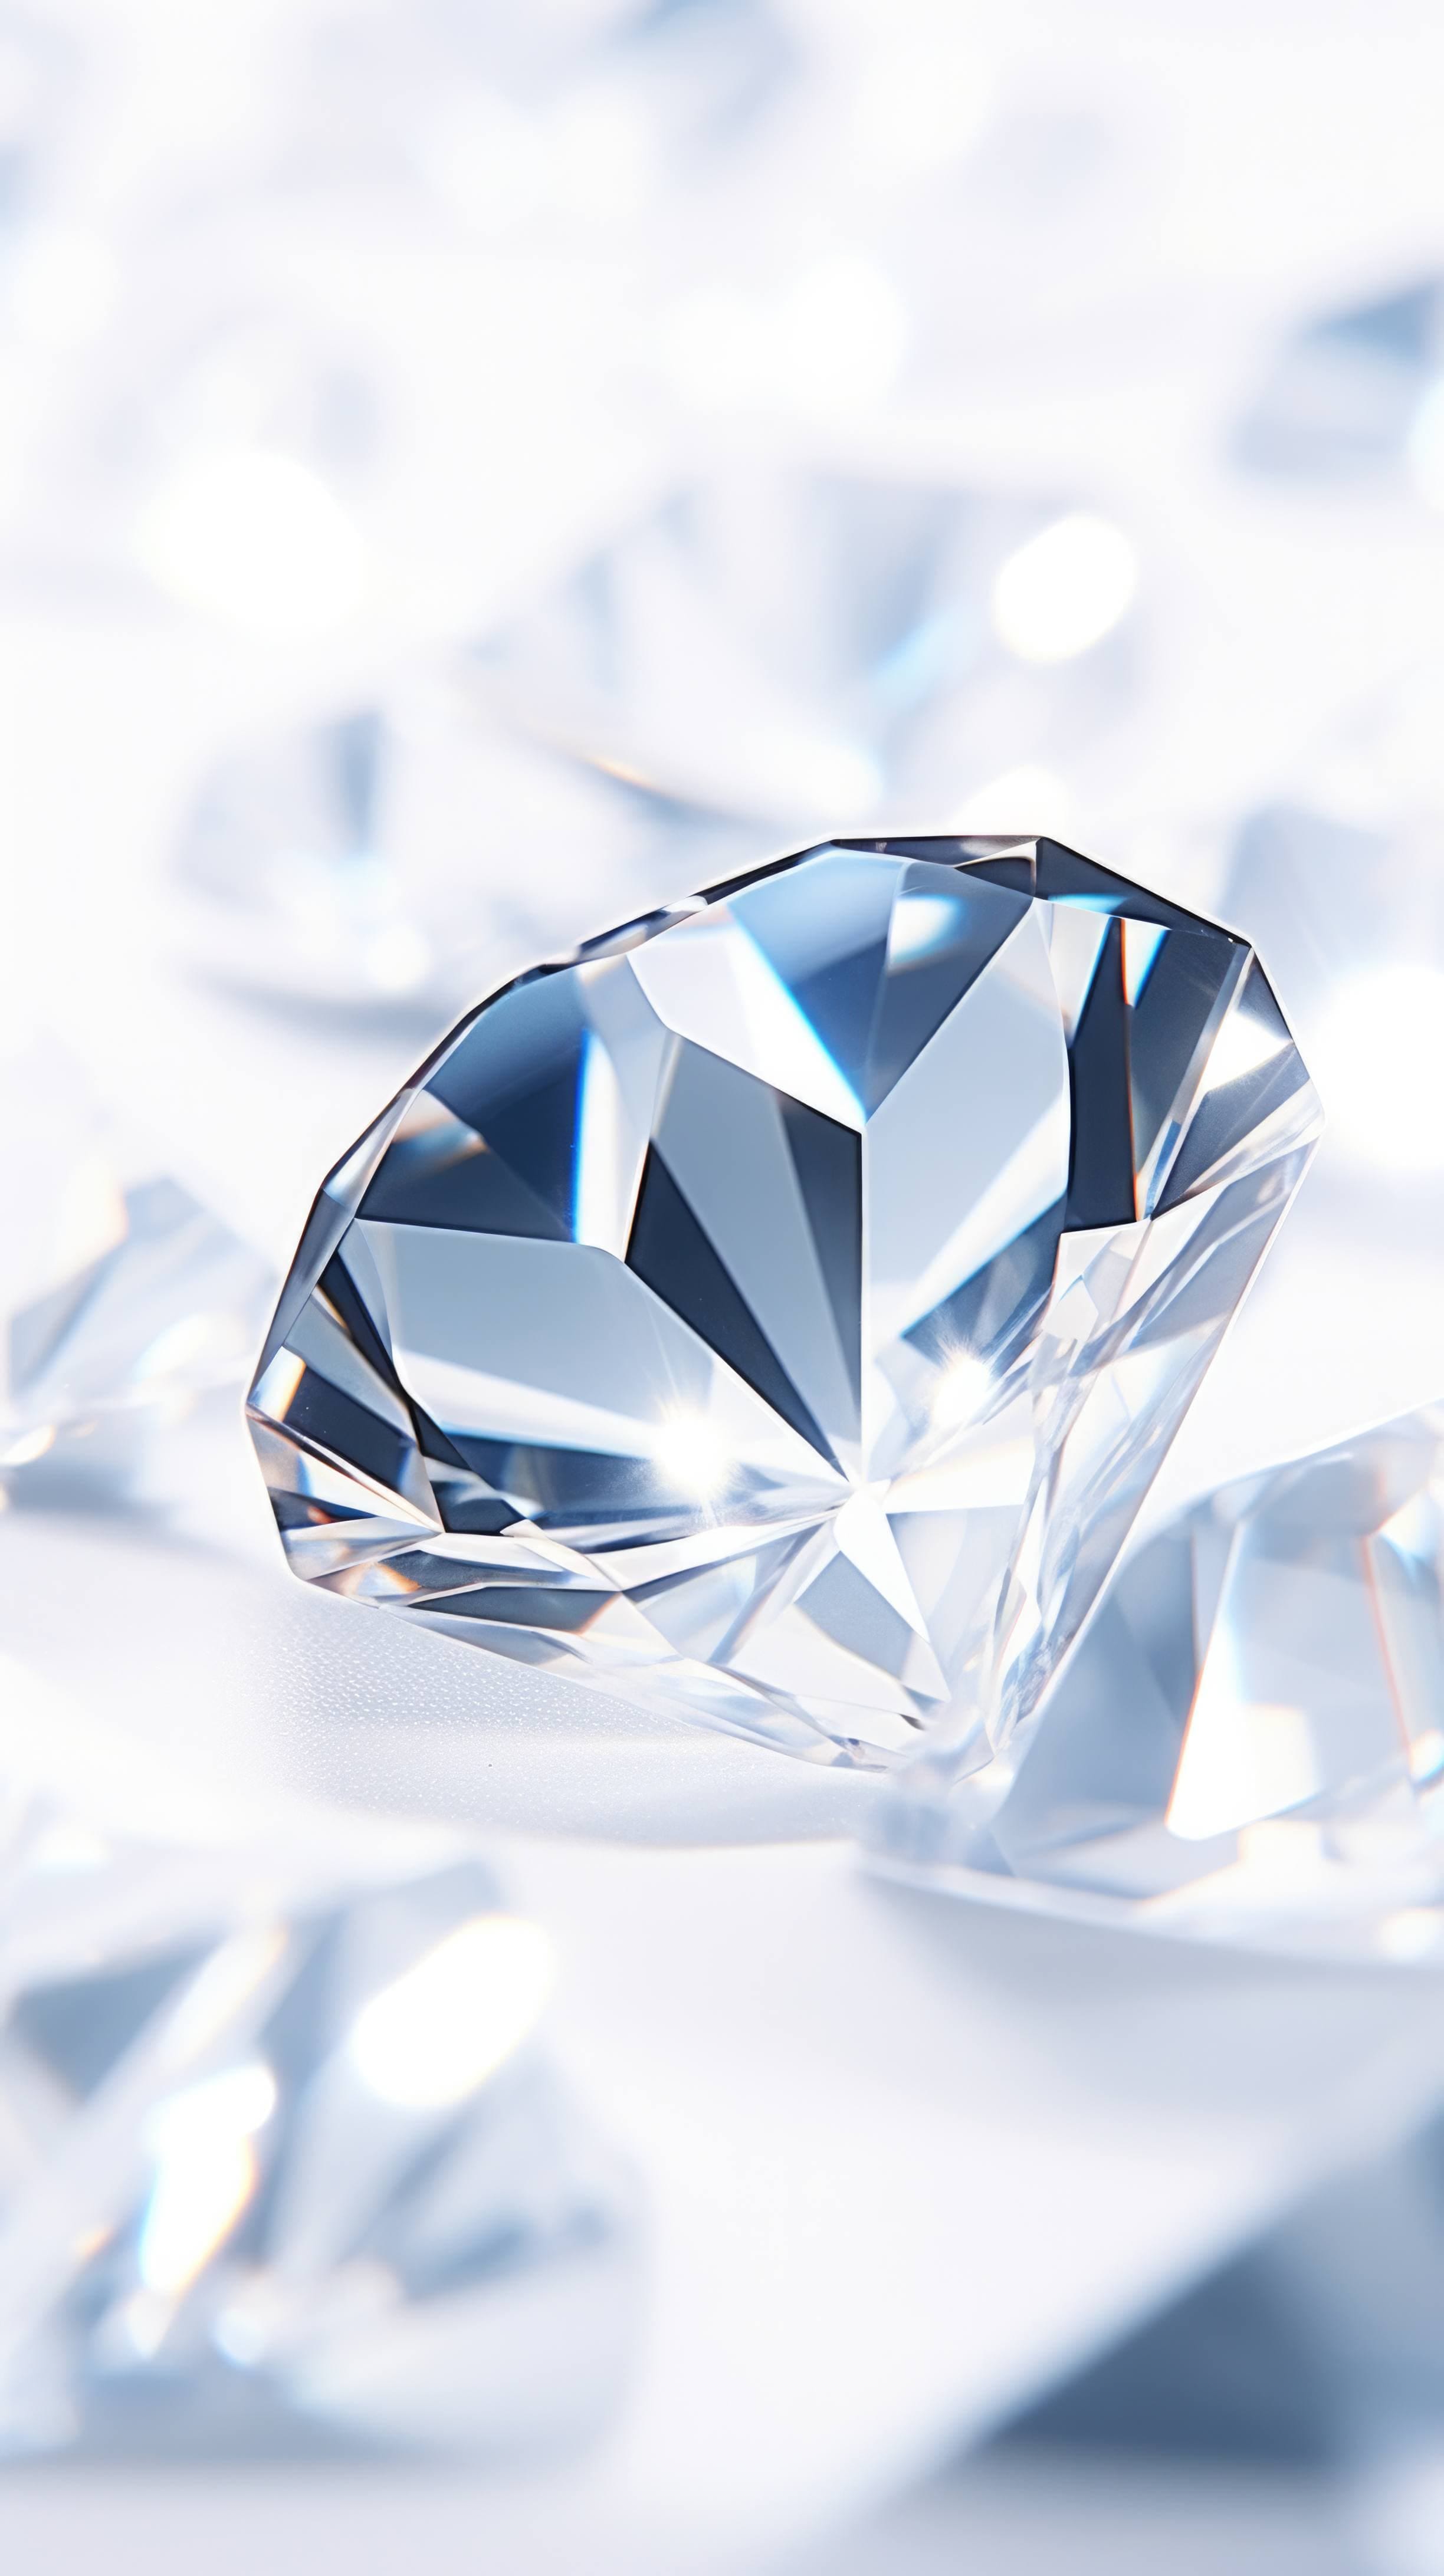 A close up of a diamond on a white background - Diamond